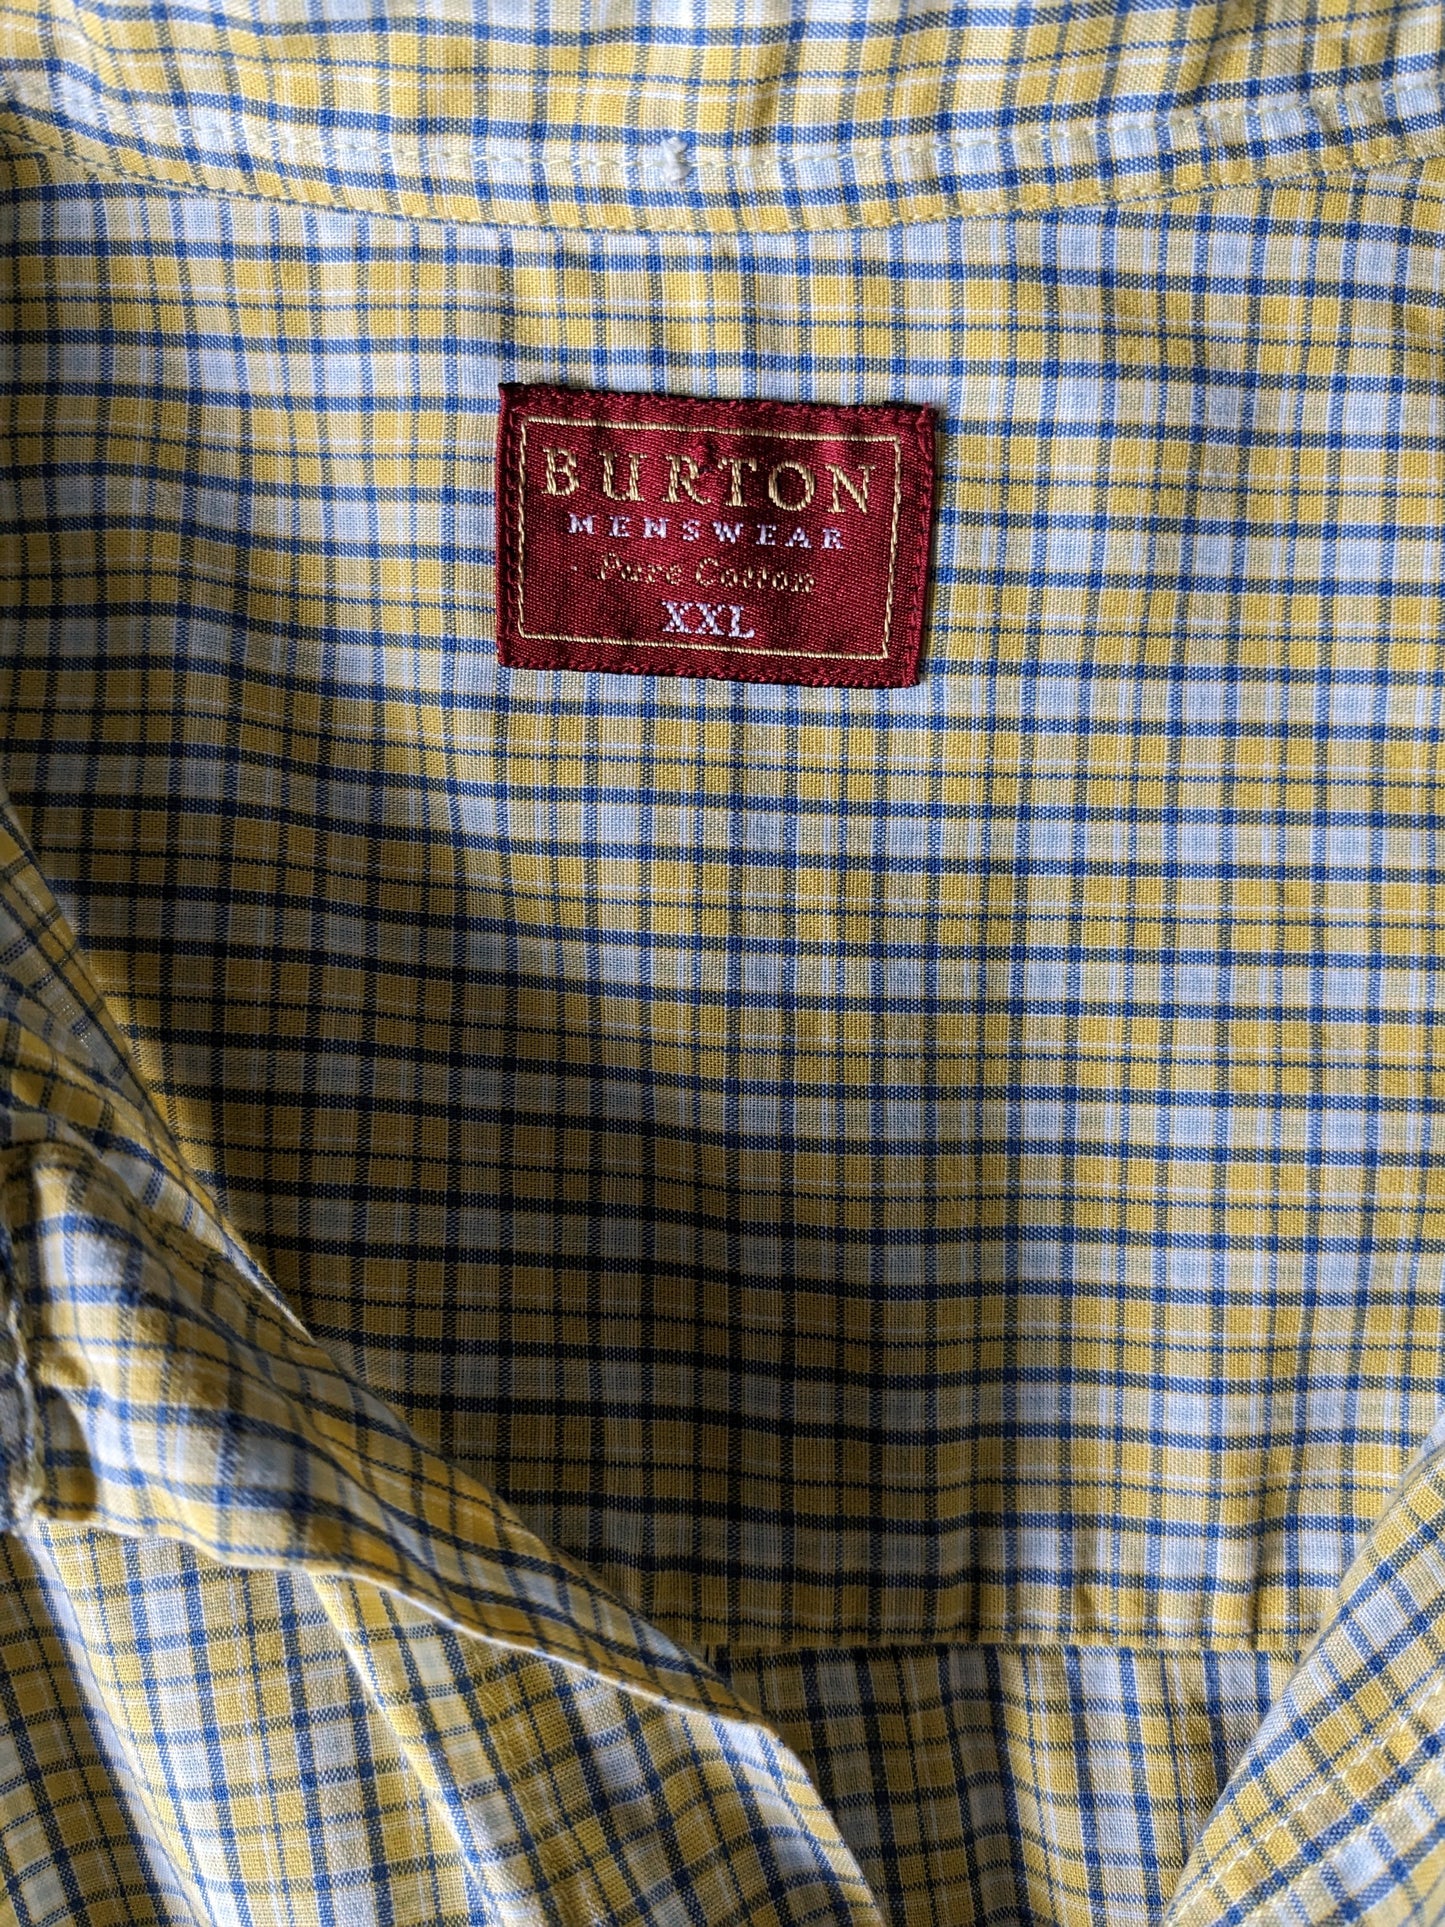 Burton Menswear Shirt short sleeve. Yellow blue white checkered. Size XXL / 2XL.